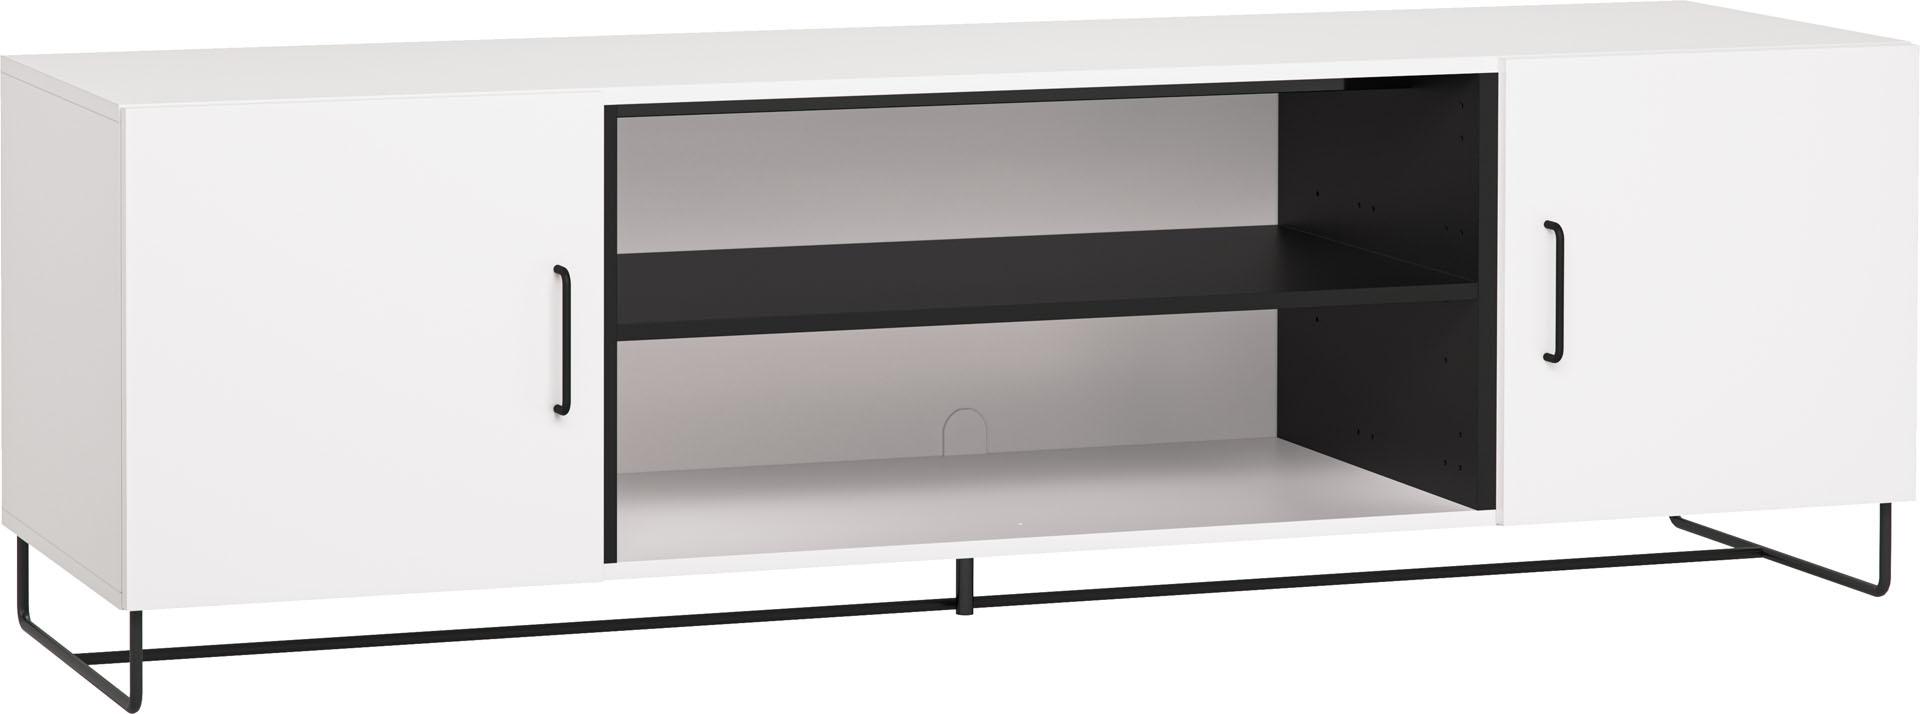 Mueble de TV ancho Creative